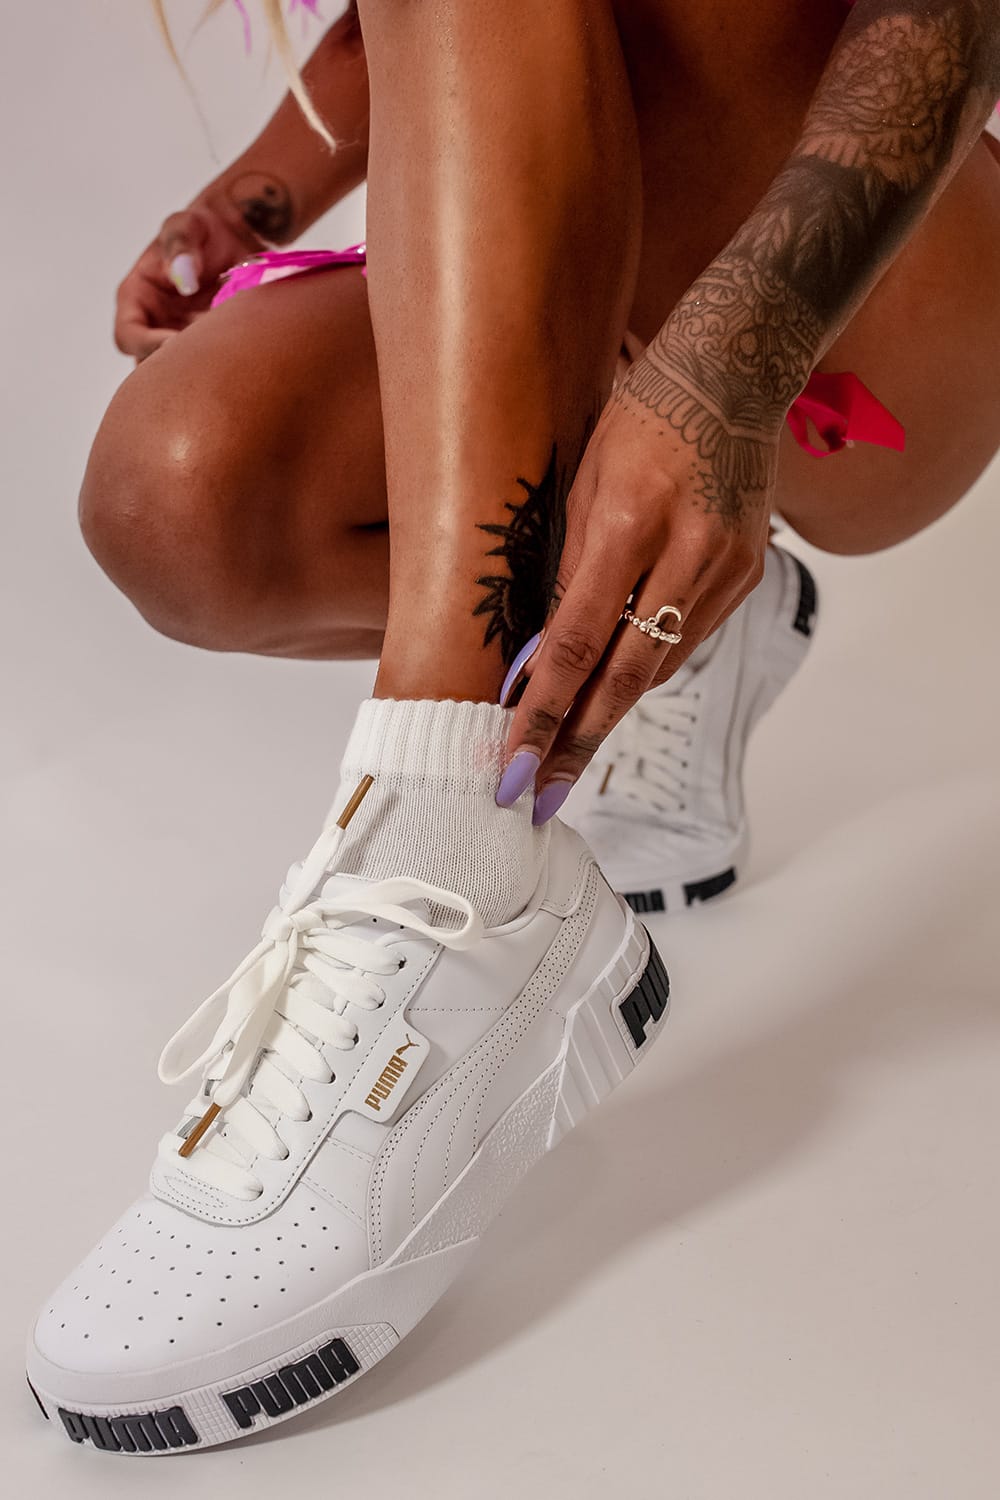 PUMA Cali Sneaker Celebrates Diversity 